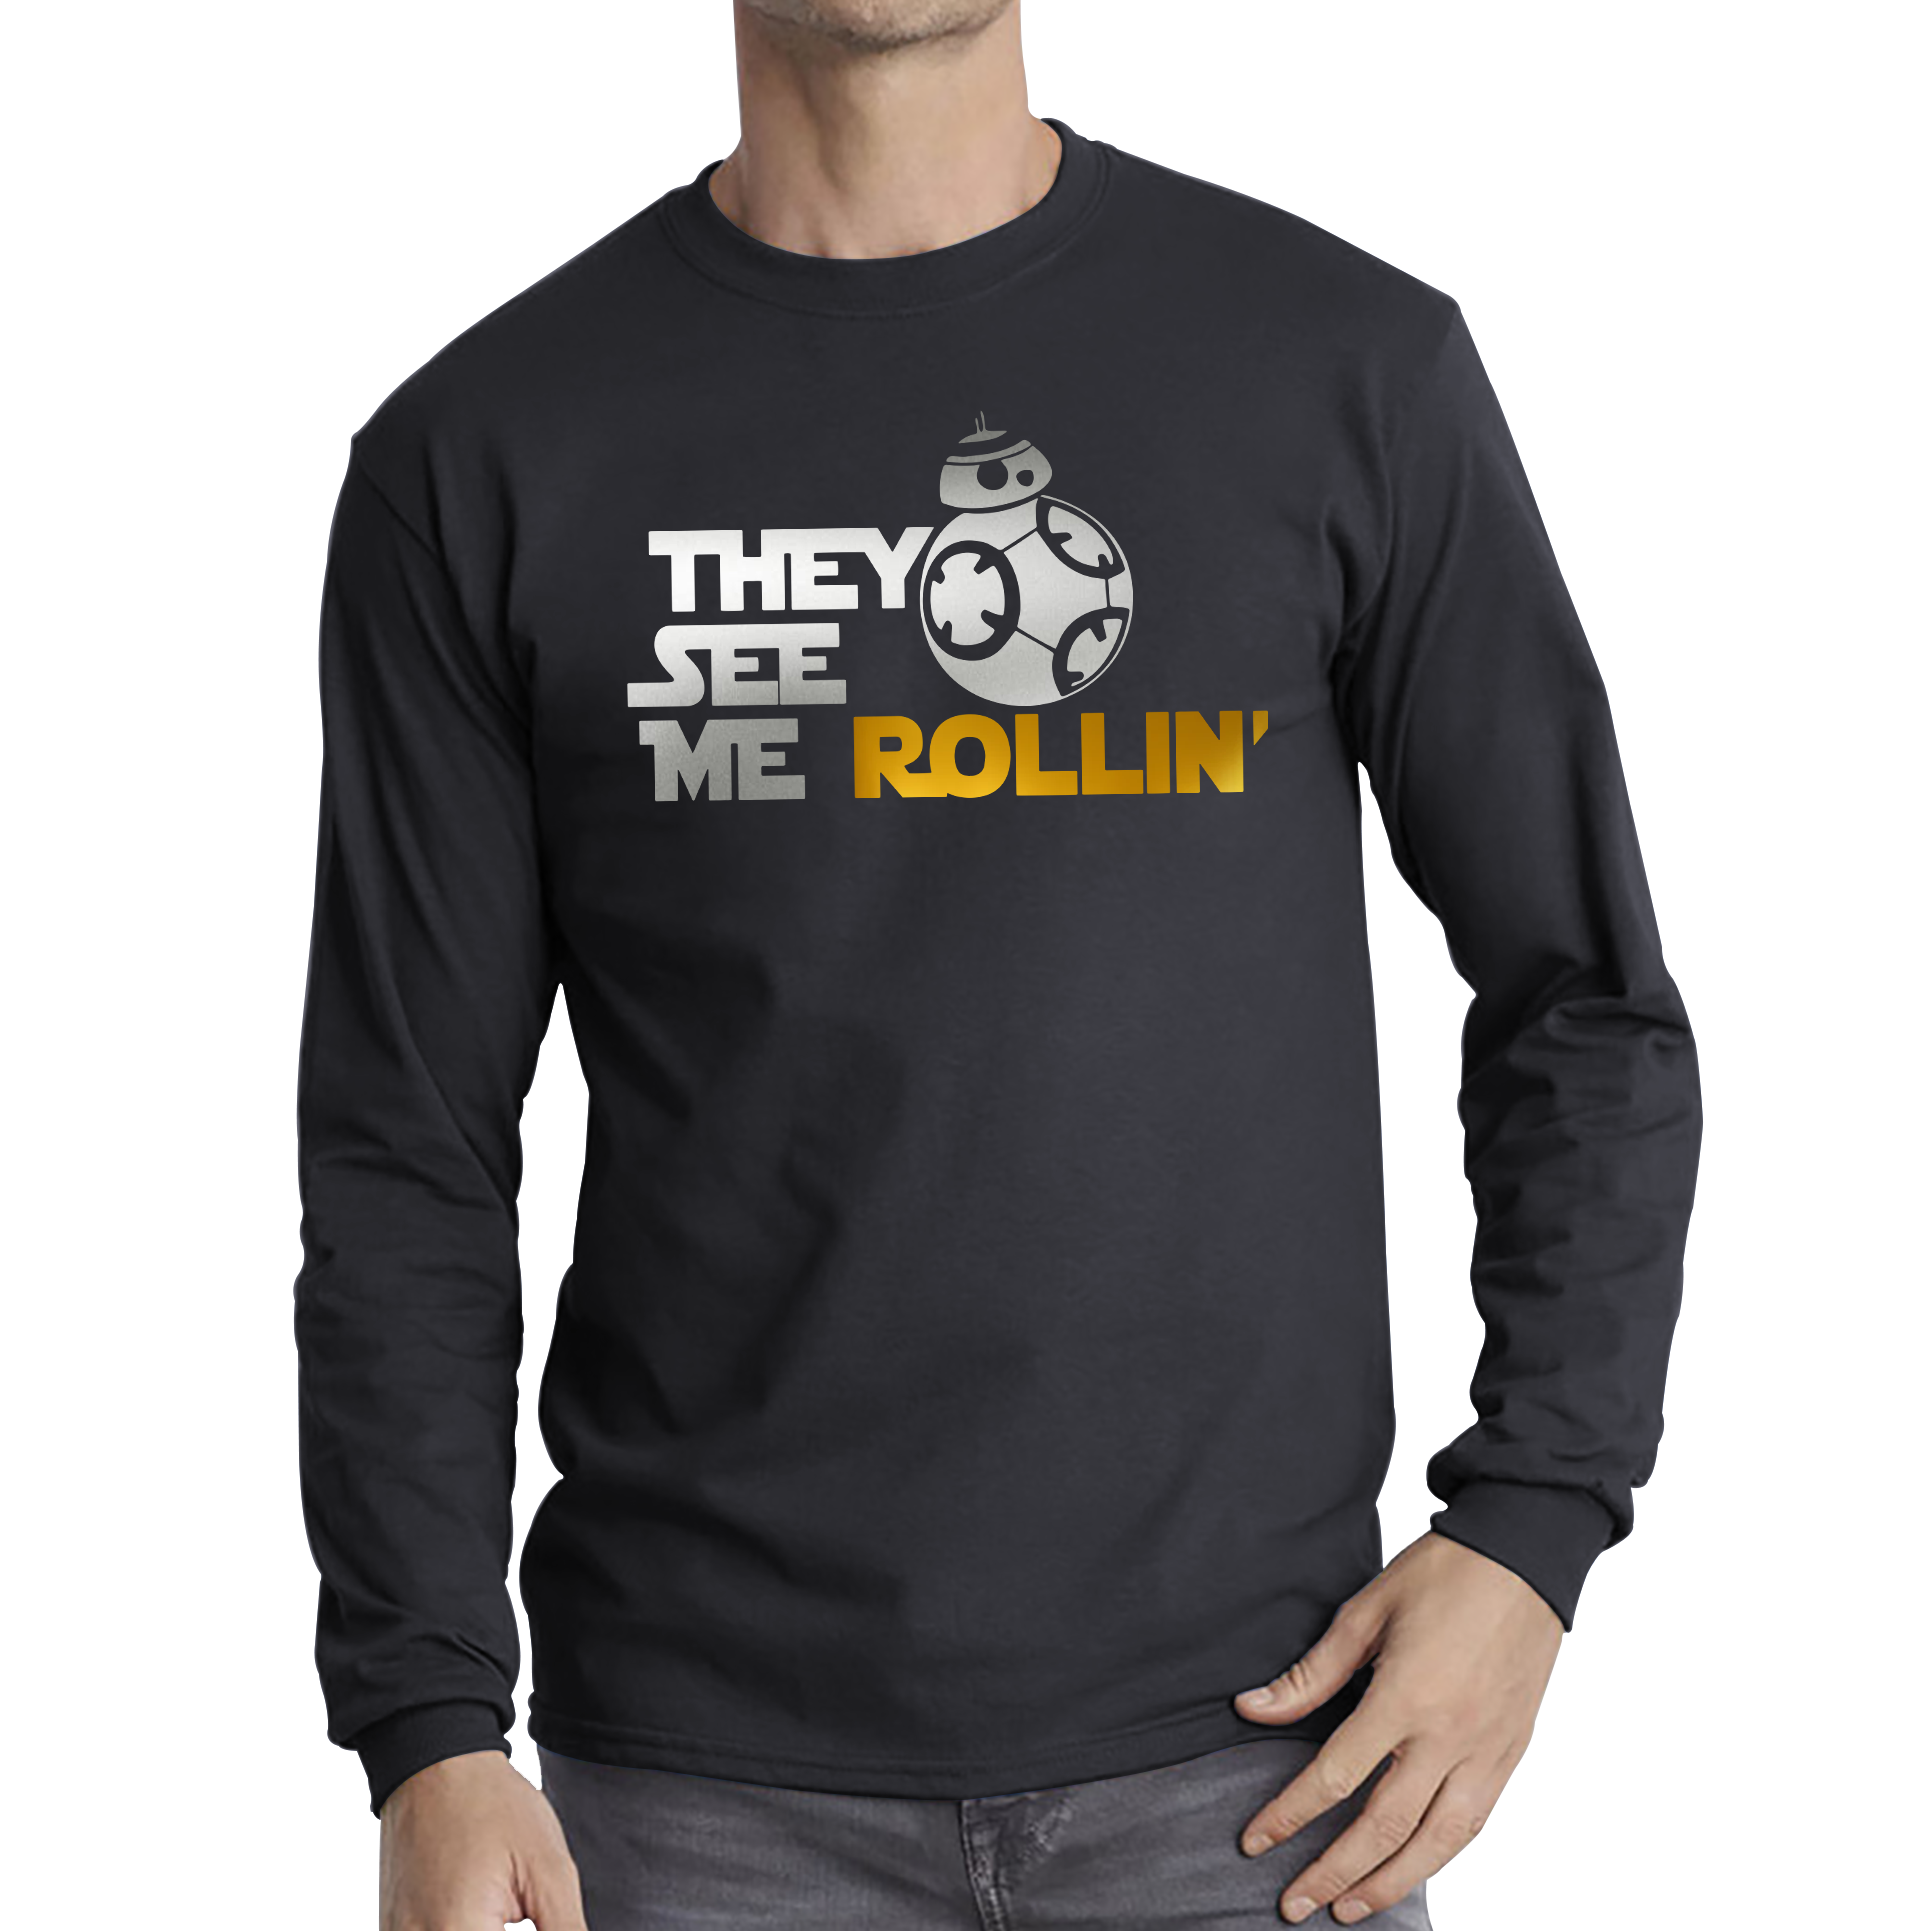 They See Me Rollin' BB-8 Star Wars Inspired Shirt Disney Star Wars Hollywood Studios Galaxy's Edge Long Sleeve T Shirt